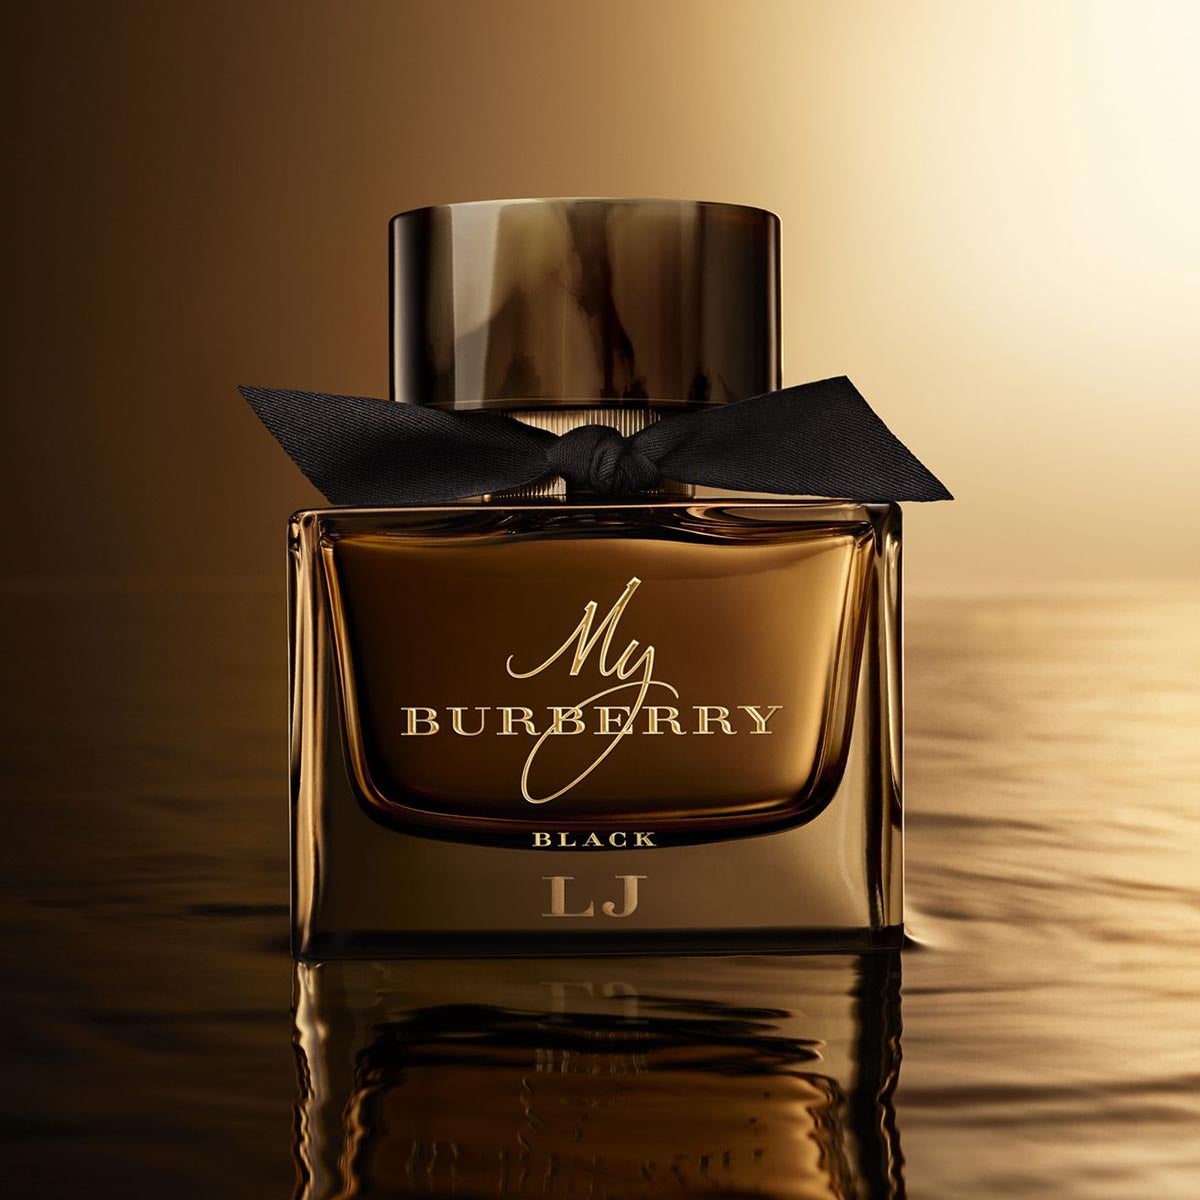 Burberry My Burberry Black Parfum - My Perfume Shop Australia